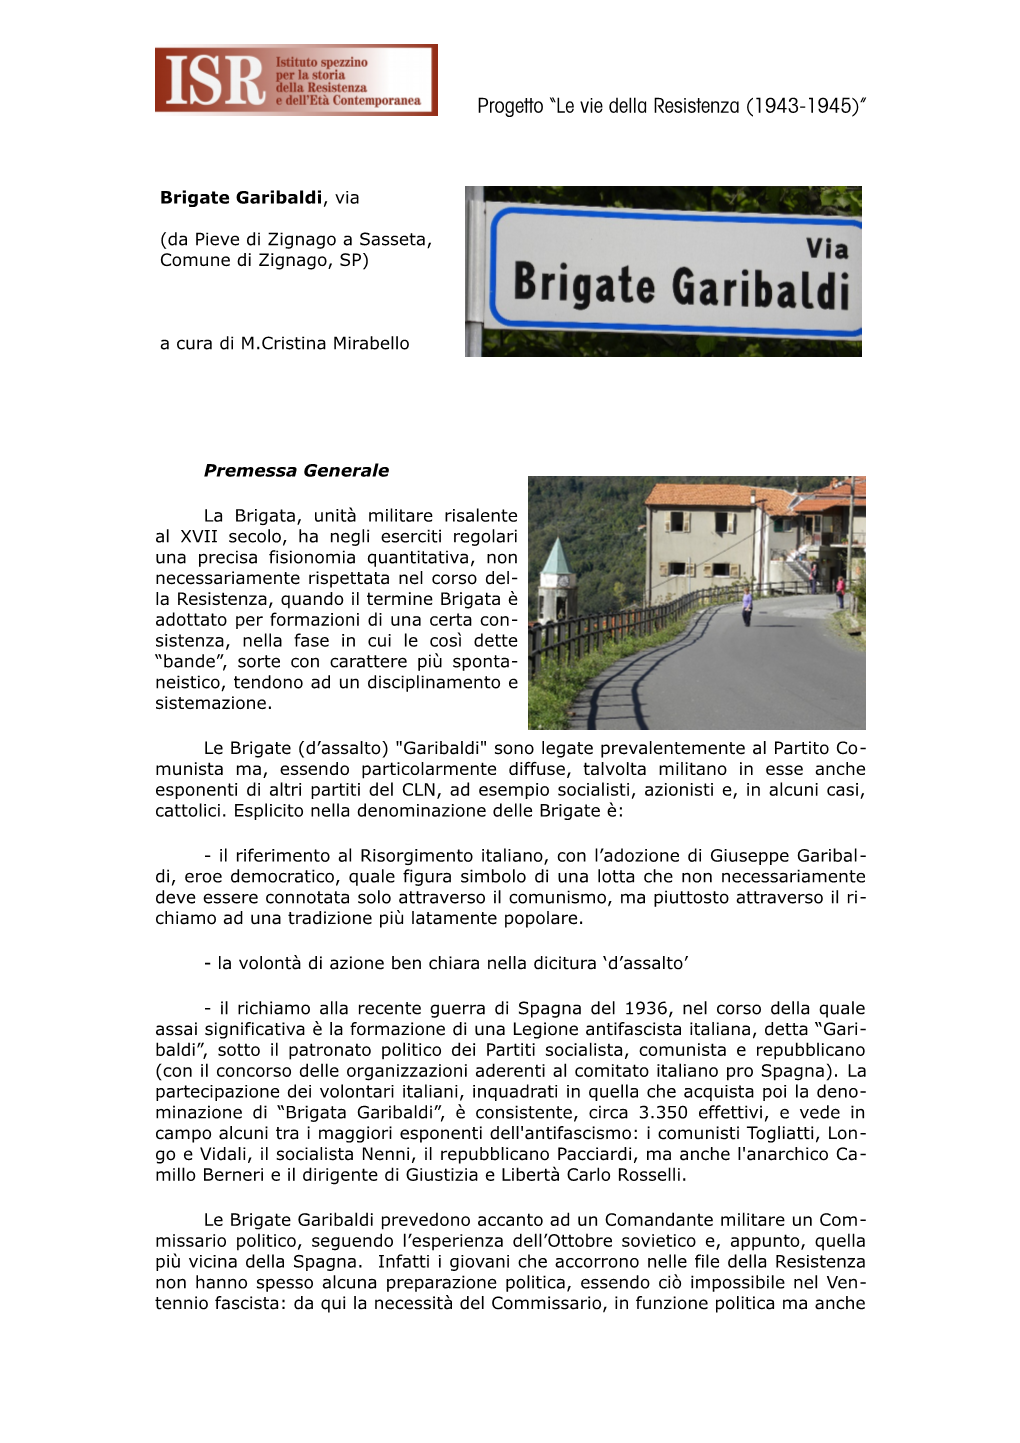 Zignago-Brigate Garibaldi-Via